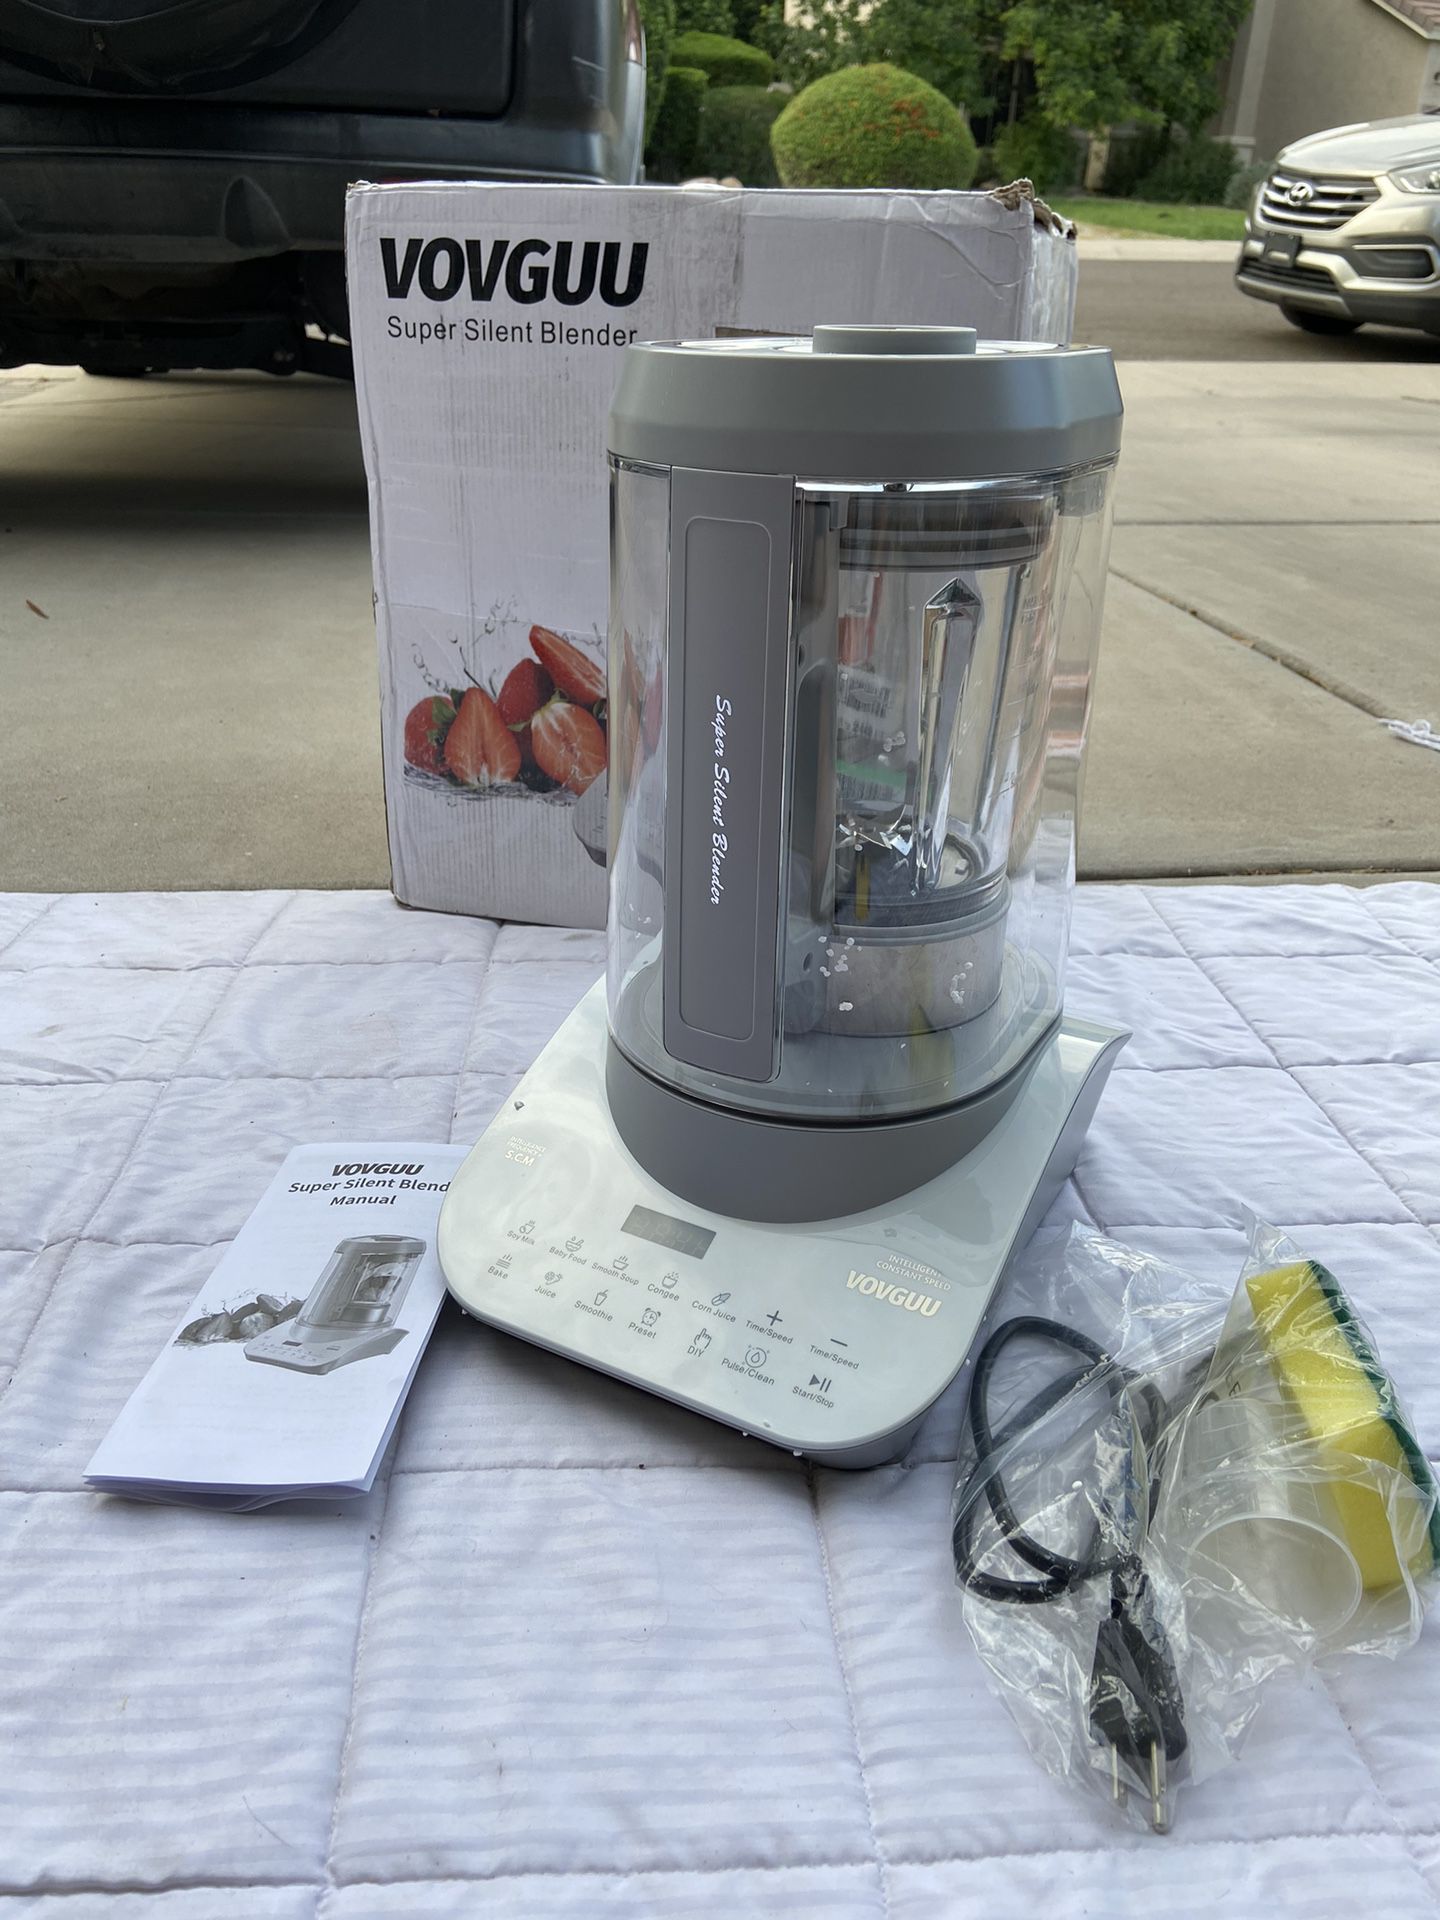  VOVGUU Quiet Blender Commercial Low noise Soundproof Heat Milk,  Soup, Quiet Smoothie Blender 48oz./1.5L Self-Cleaning: Home & Kitchen